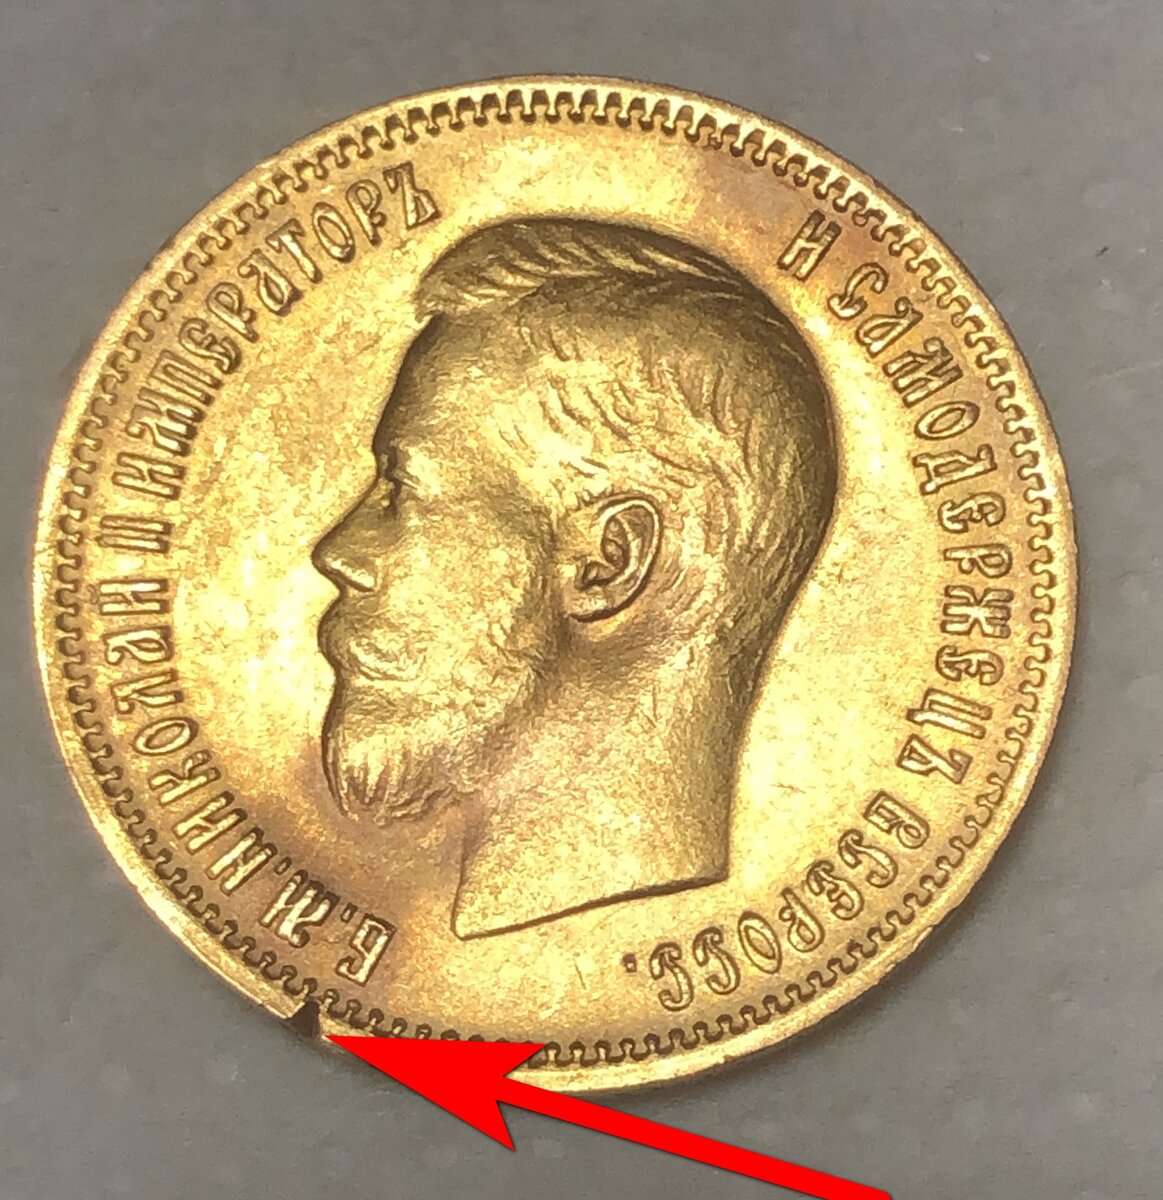 Золотая монета 10000 рублей. Золотая монета России достоинством 10000 рублей. Монета стал крафт.